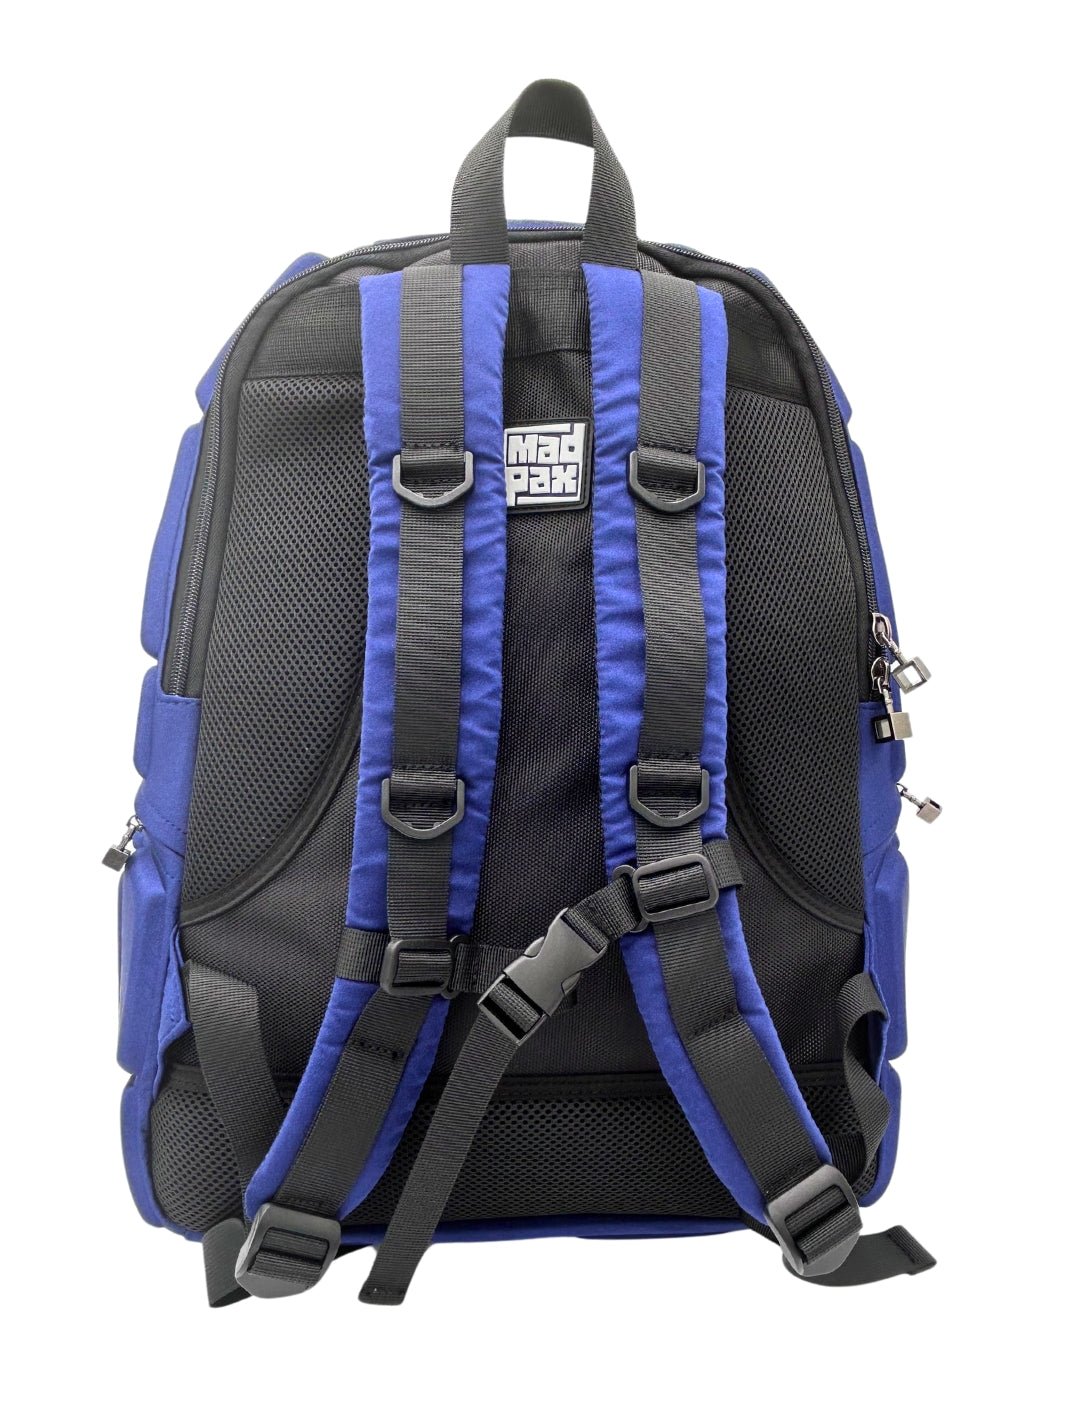 Wild Blue Yonder Backpack - Madpax